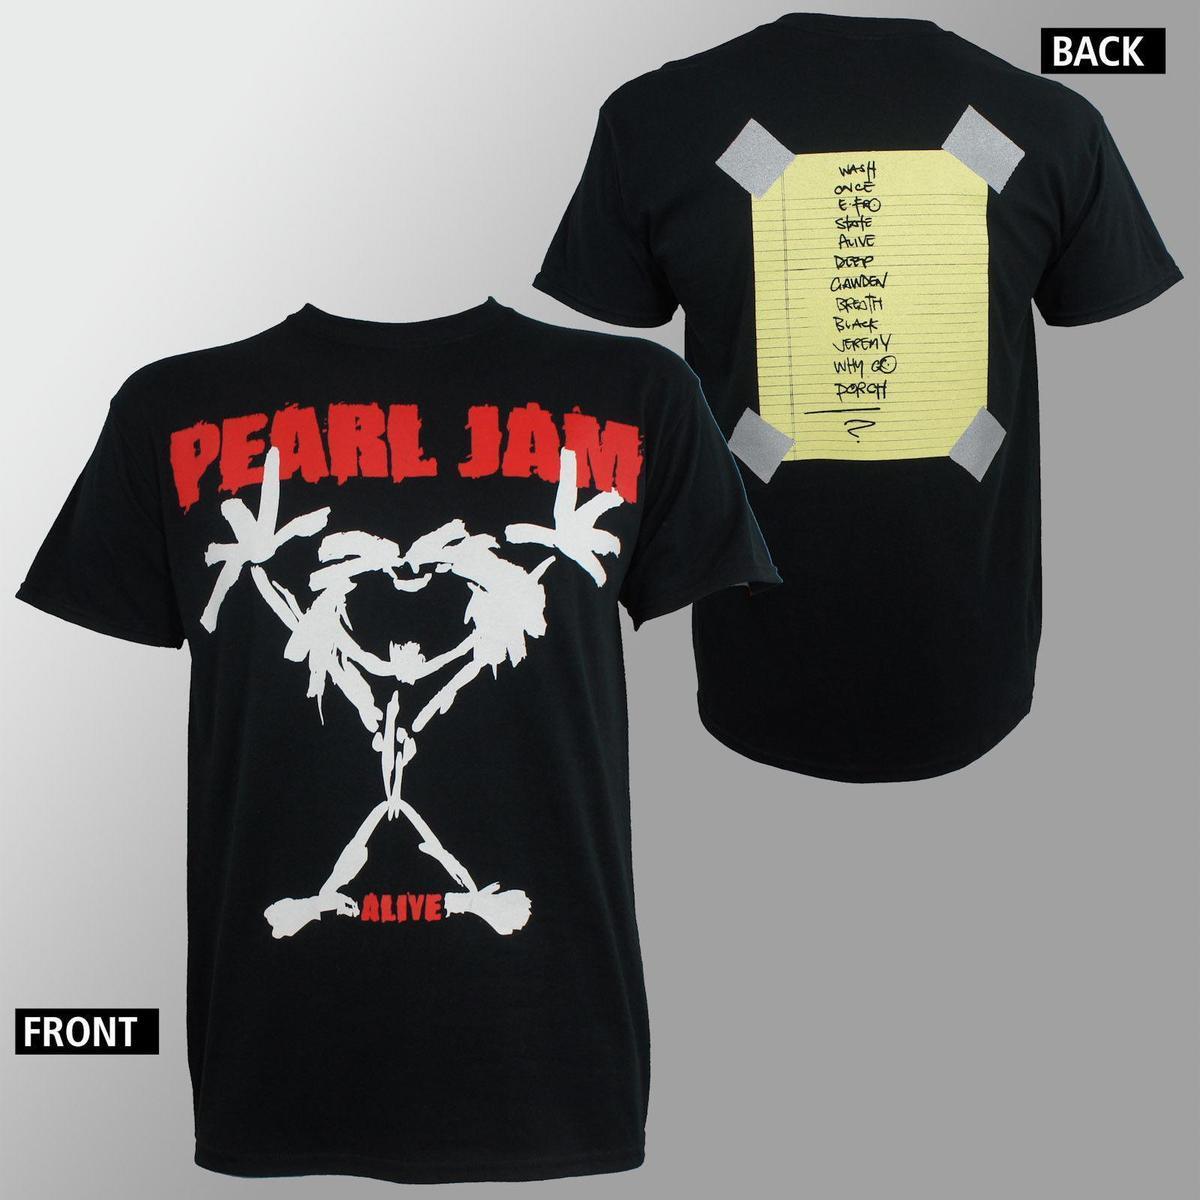 Pearl Jam Stickman Logo - Authentic PEARL JAM Stickman Logo T SHIRT S M L XL NEW Buy T Shirts ...